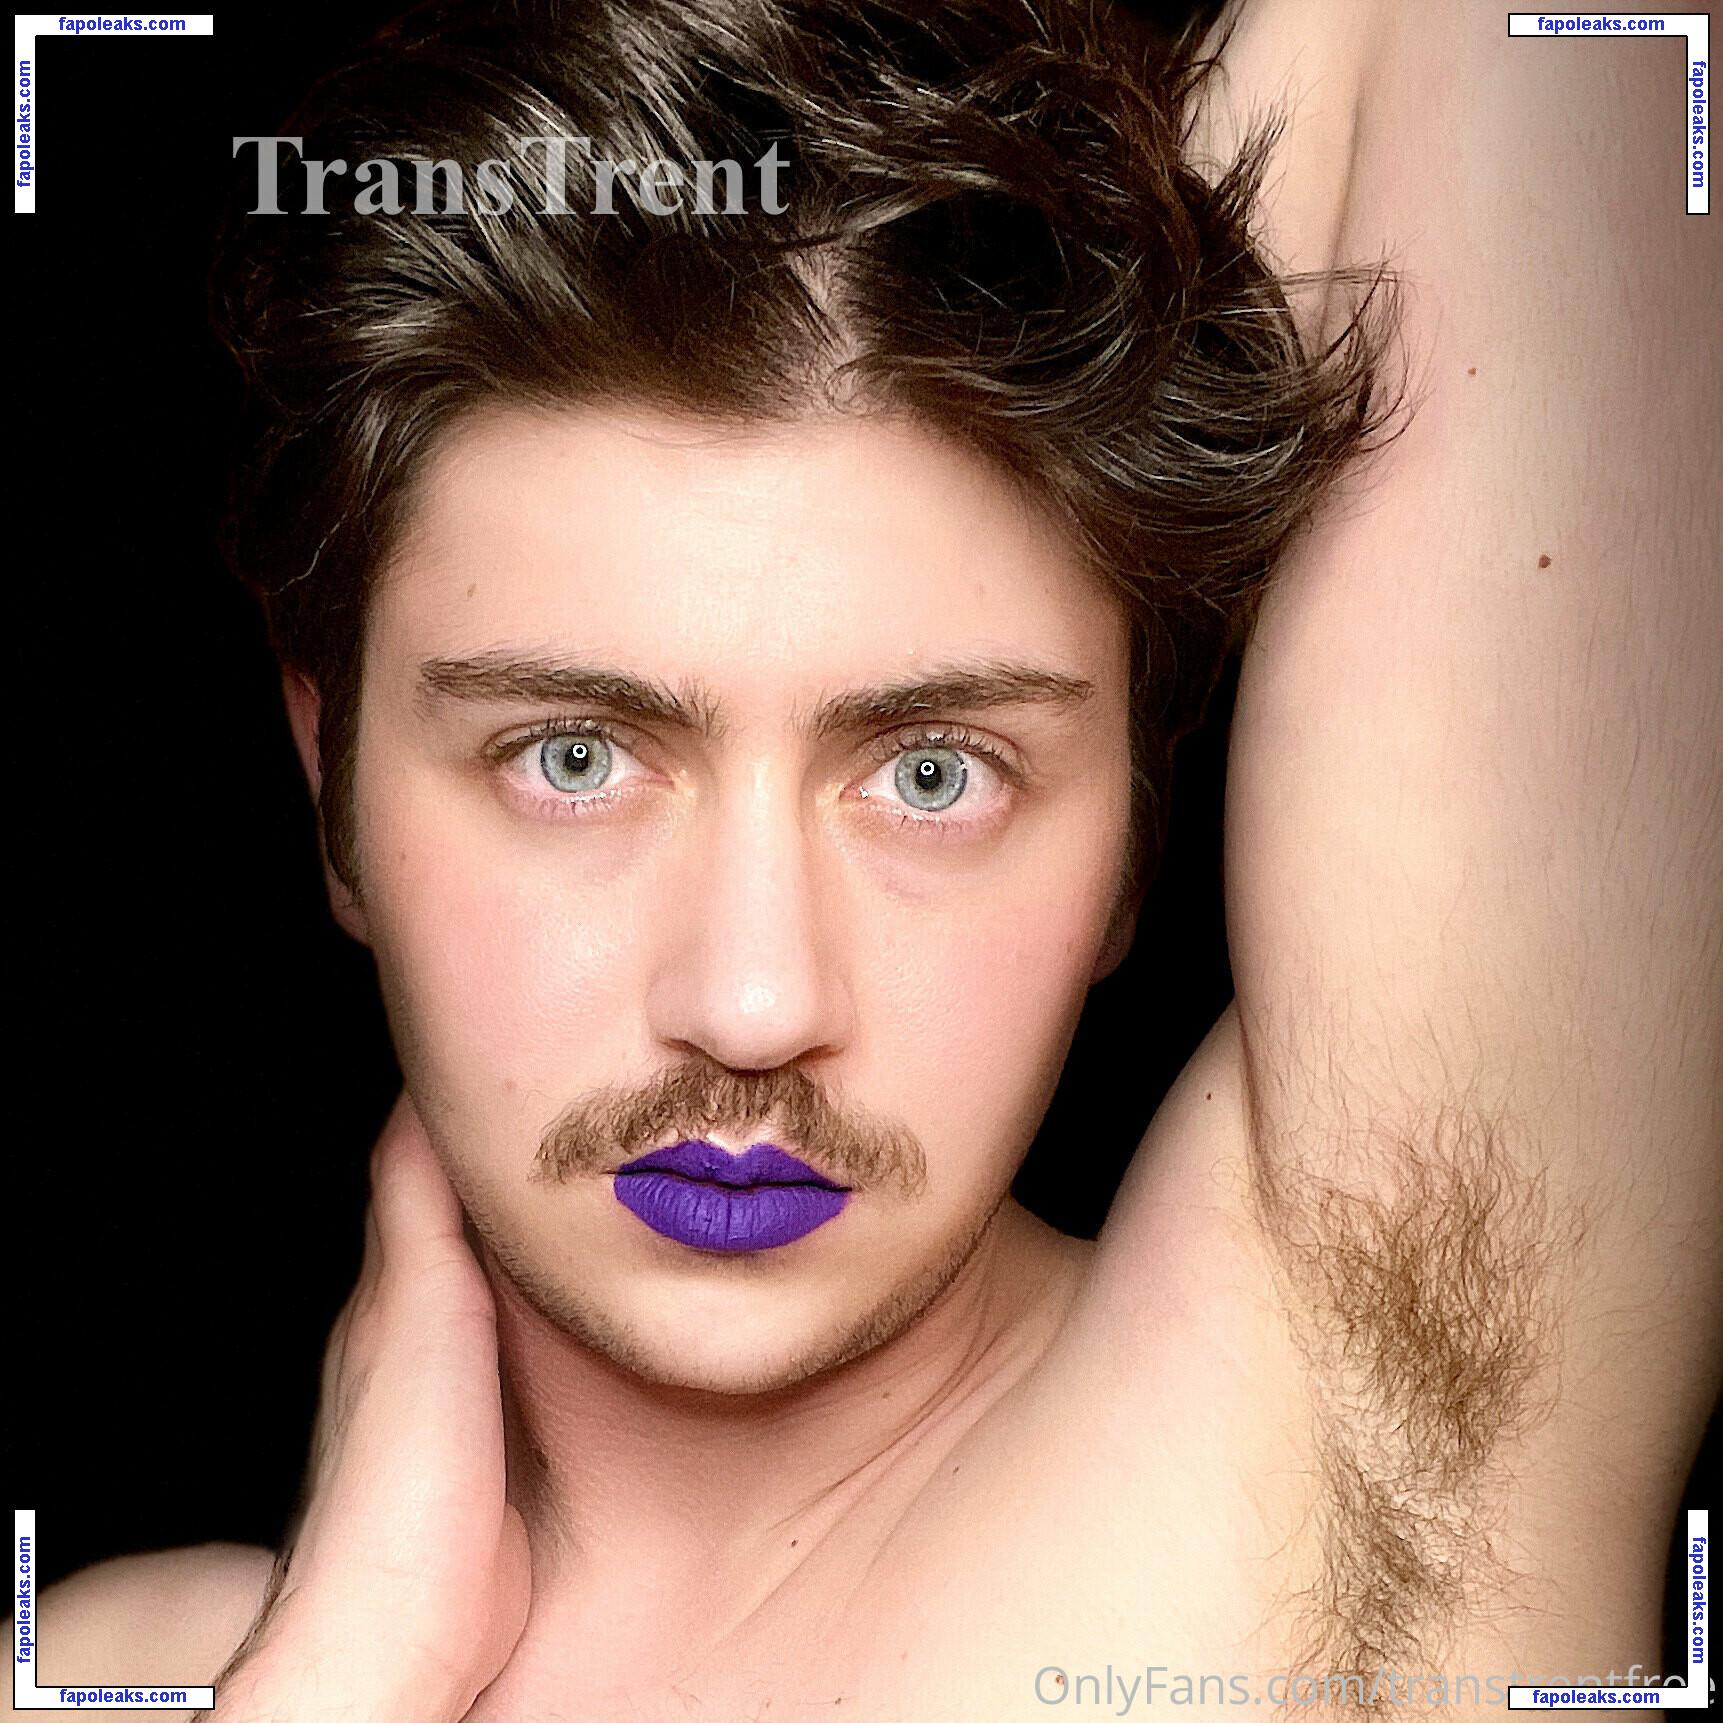 transtrentfree / toesaintfree голая фото #0049 с Онлифанс